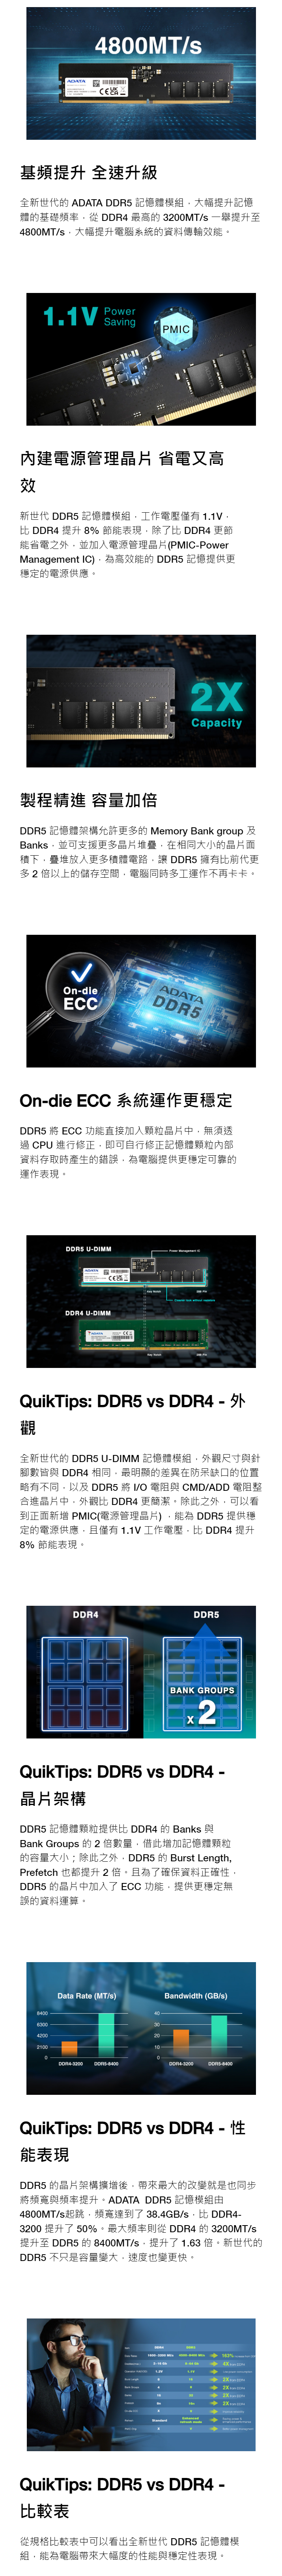 FireShot Capture 366 - DDR5-4800 U-DIMM 記憶體模組 - ADATA - www.adata.com.png